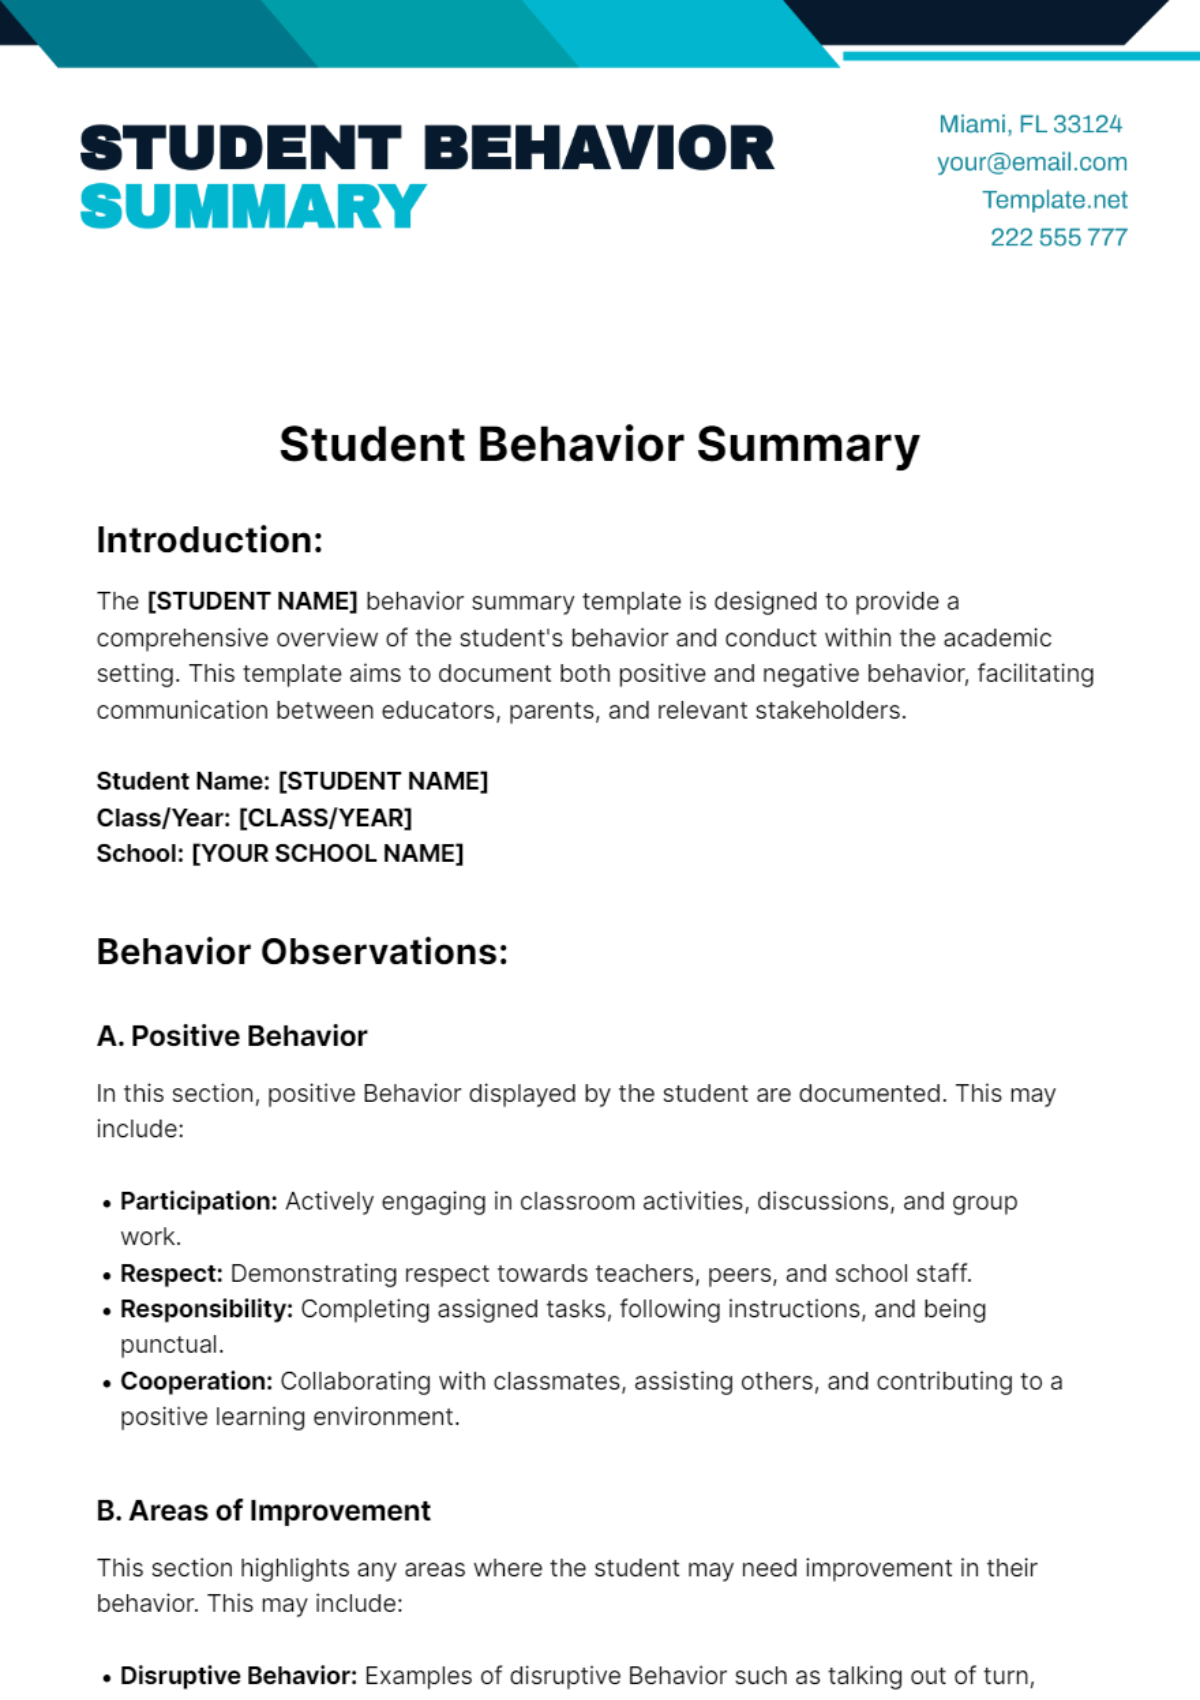 Student Behavior Summary Template